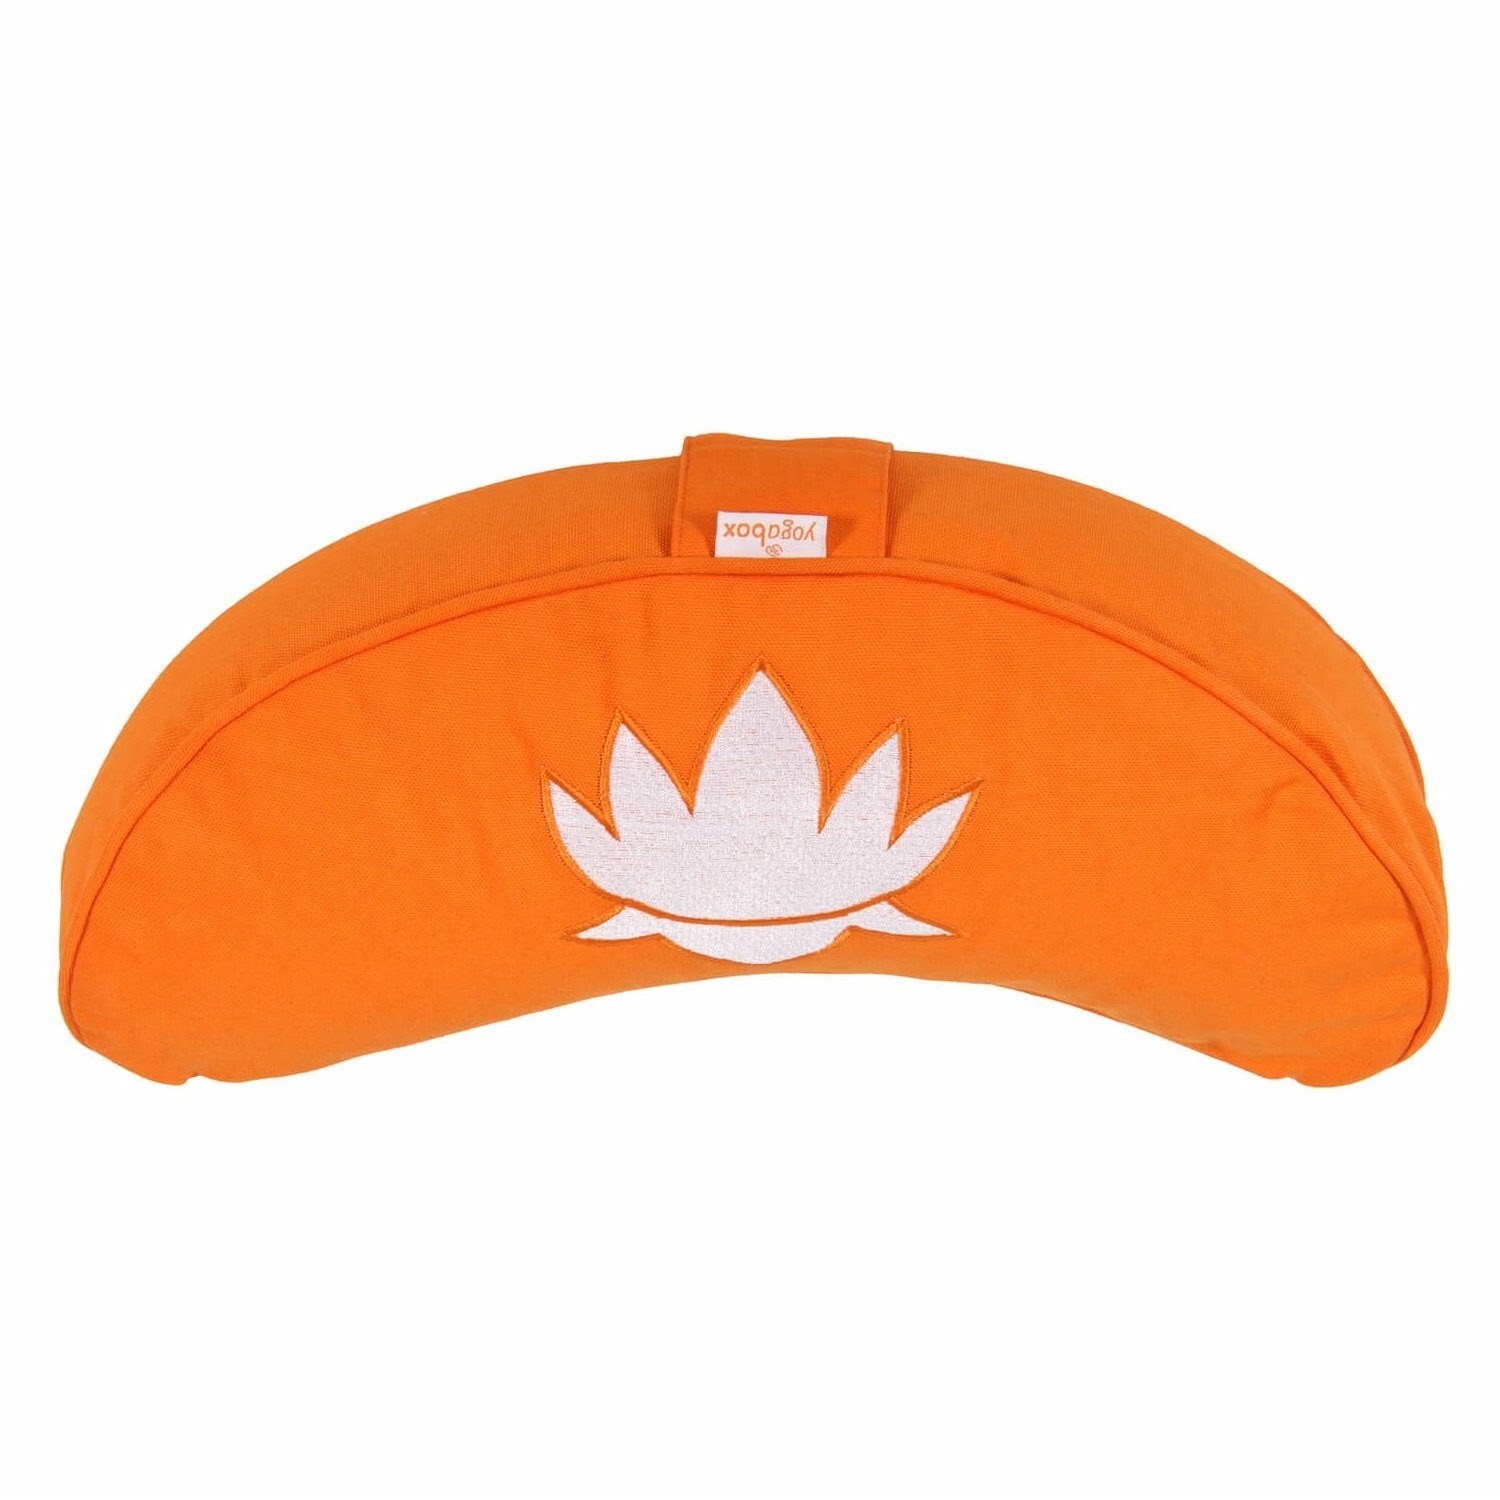 Stick BASIC Halbmond yogabox Yogakissen Lotus orange weiß